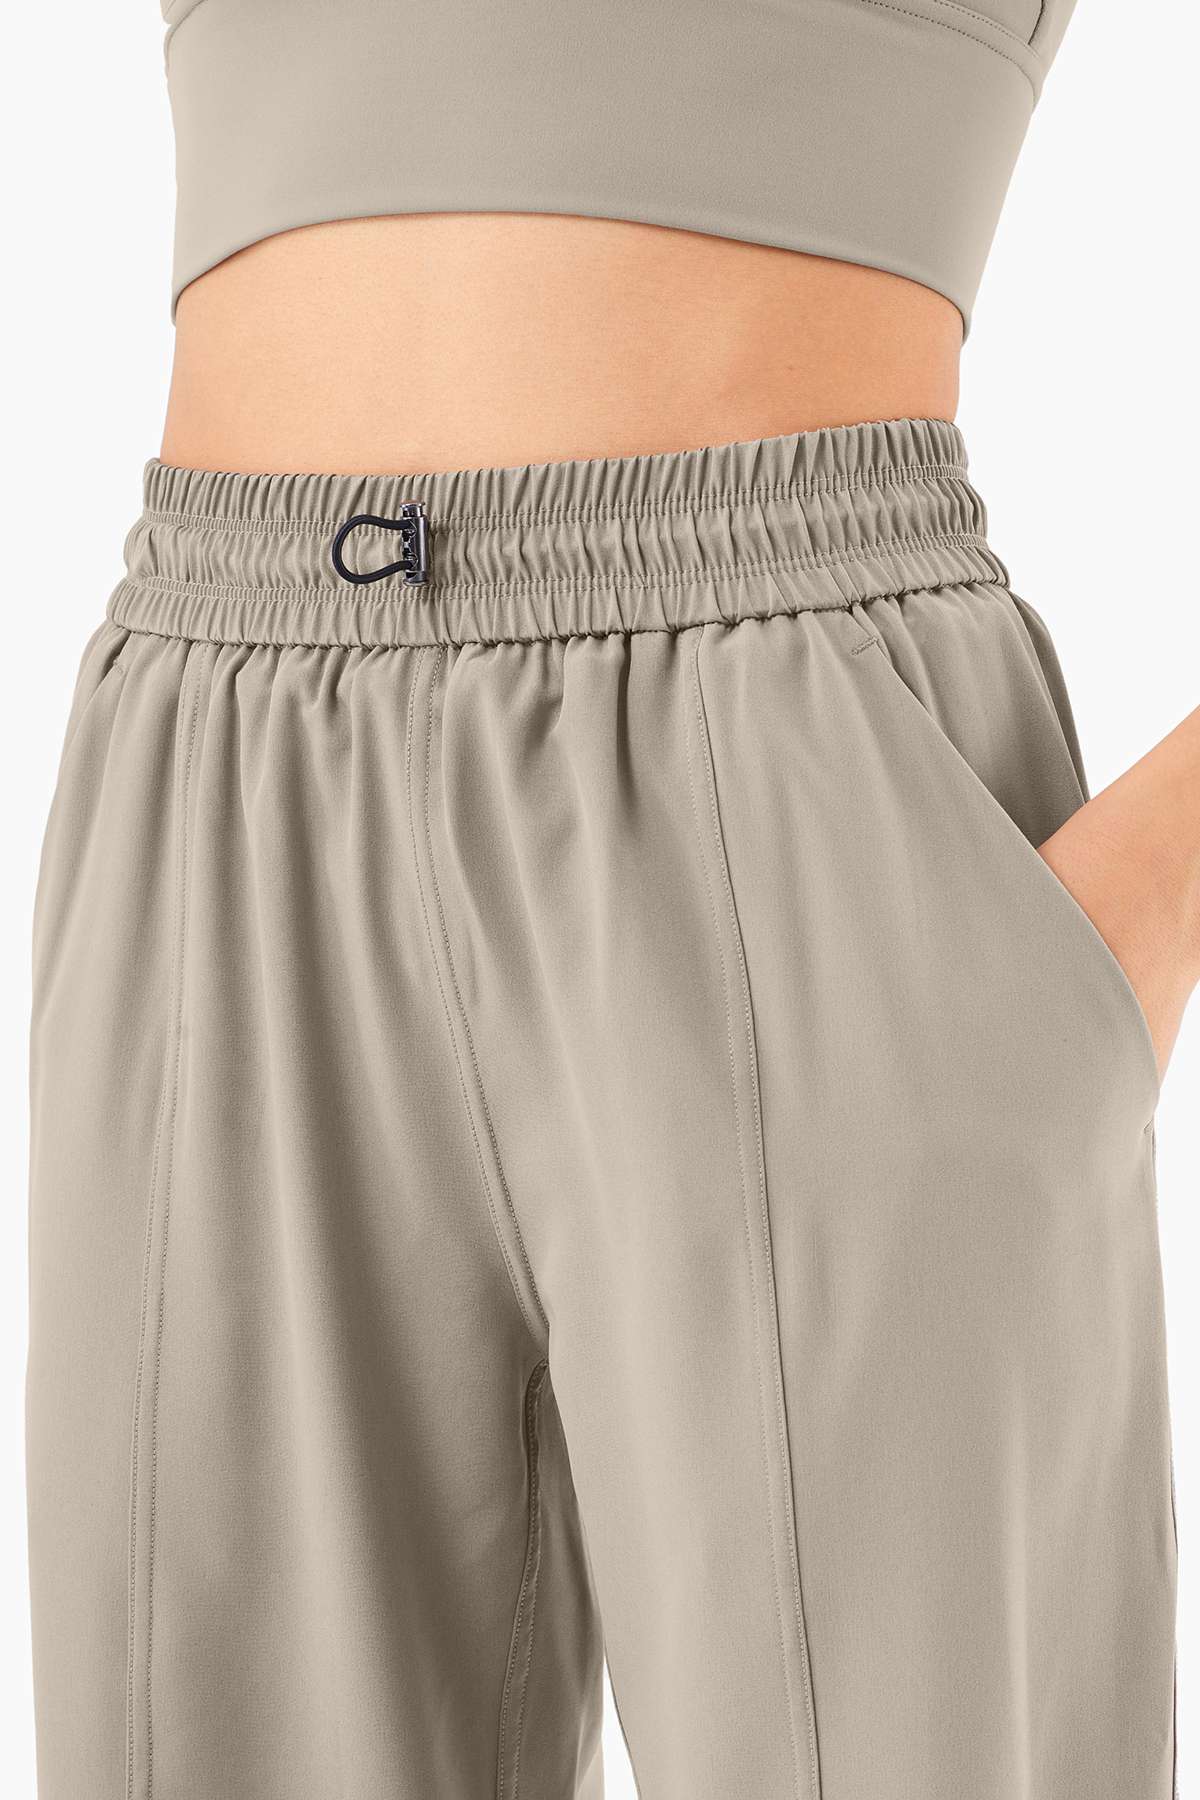 Cinch Bottom Sweatpants Lounge Pants for Women – Zioccie